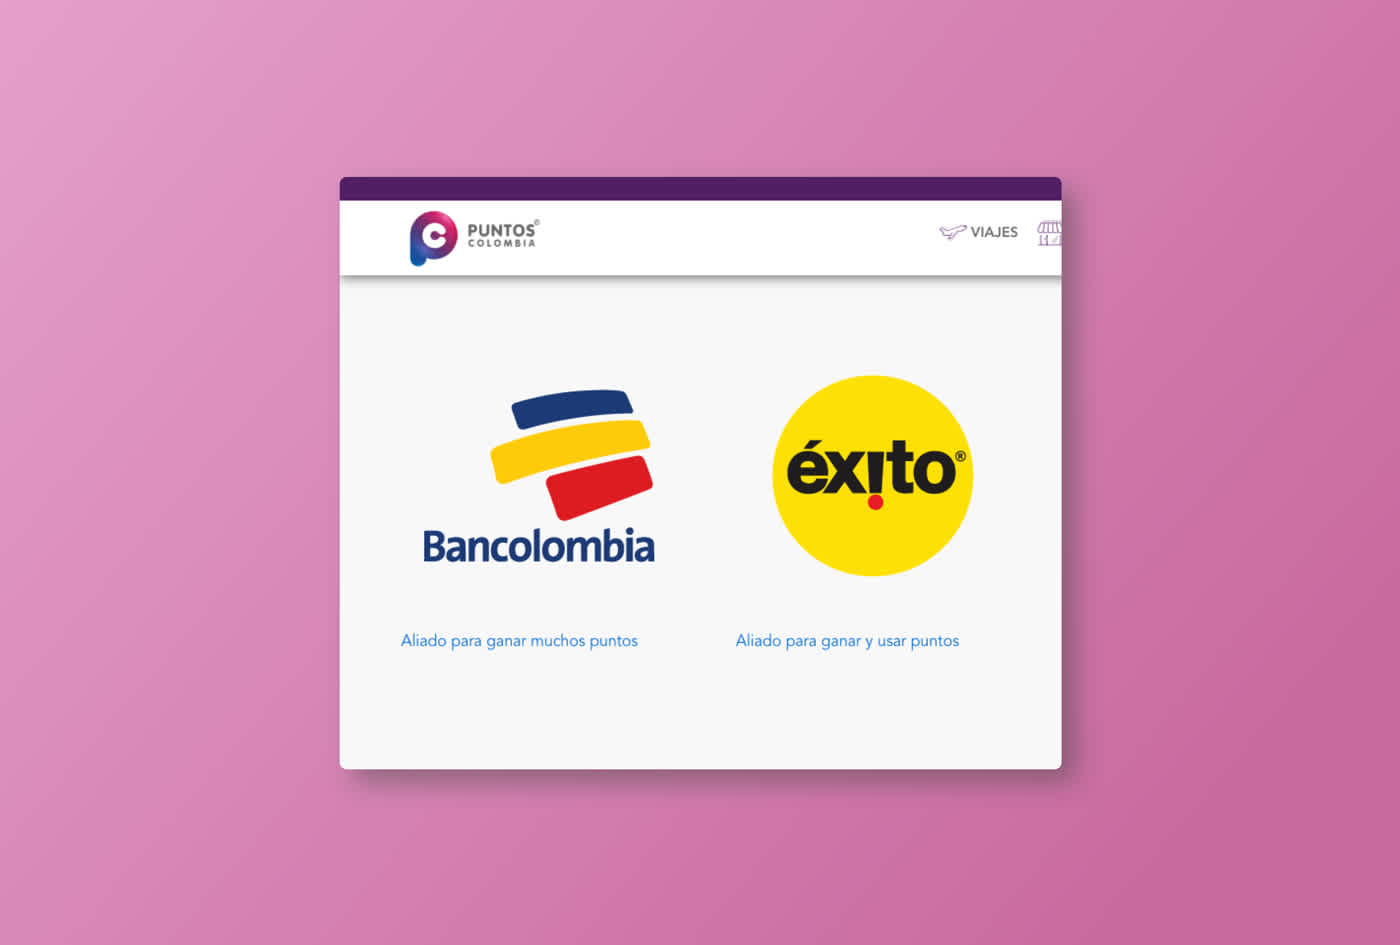 Bancolombia and Grupo Exito logos